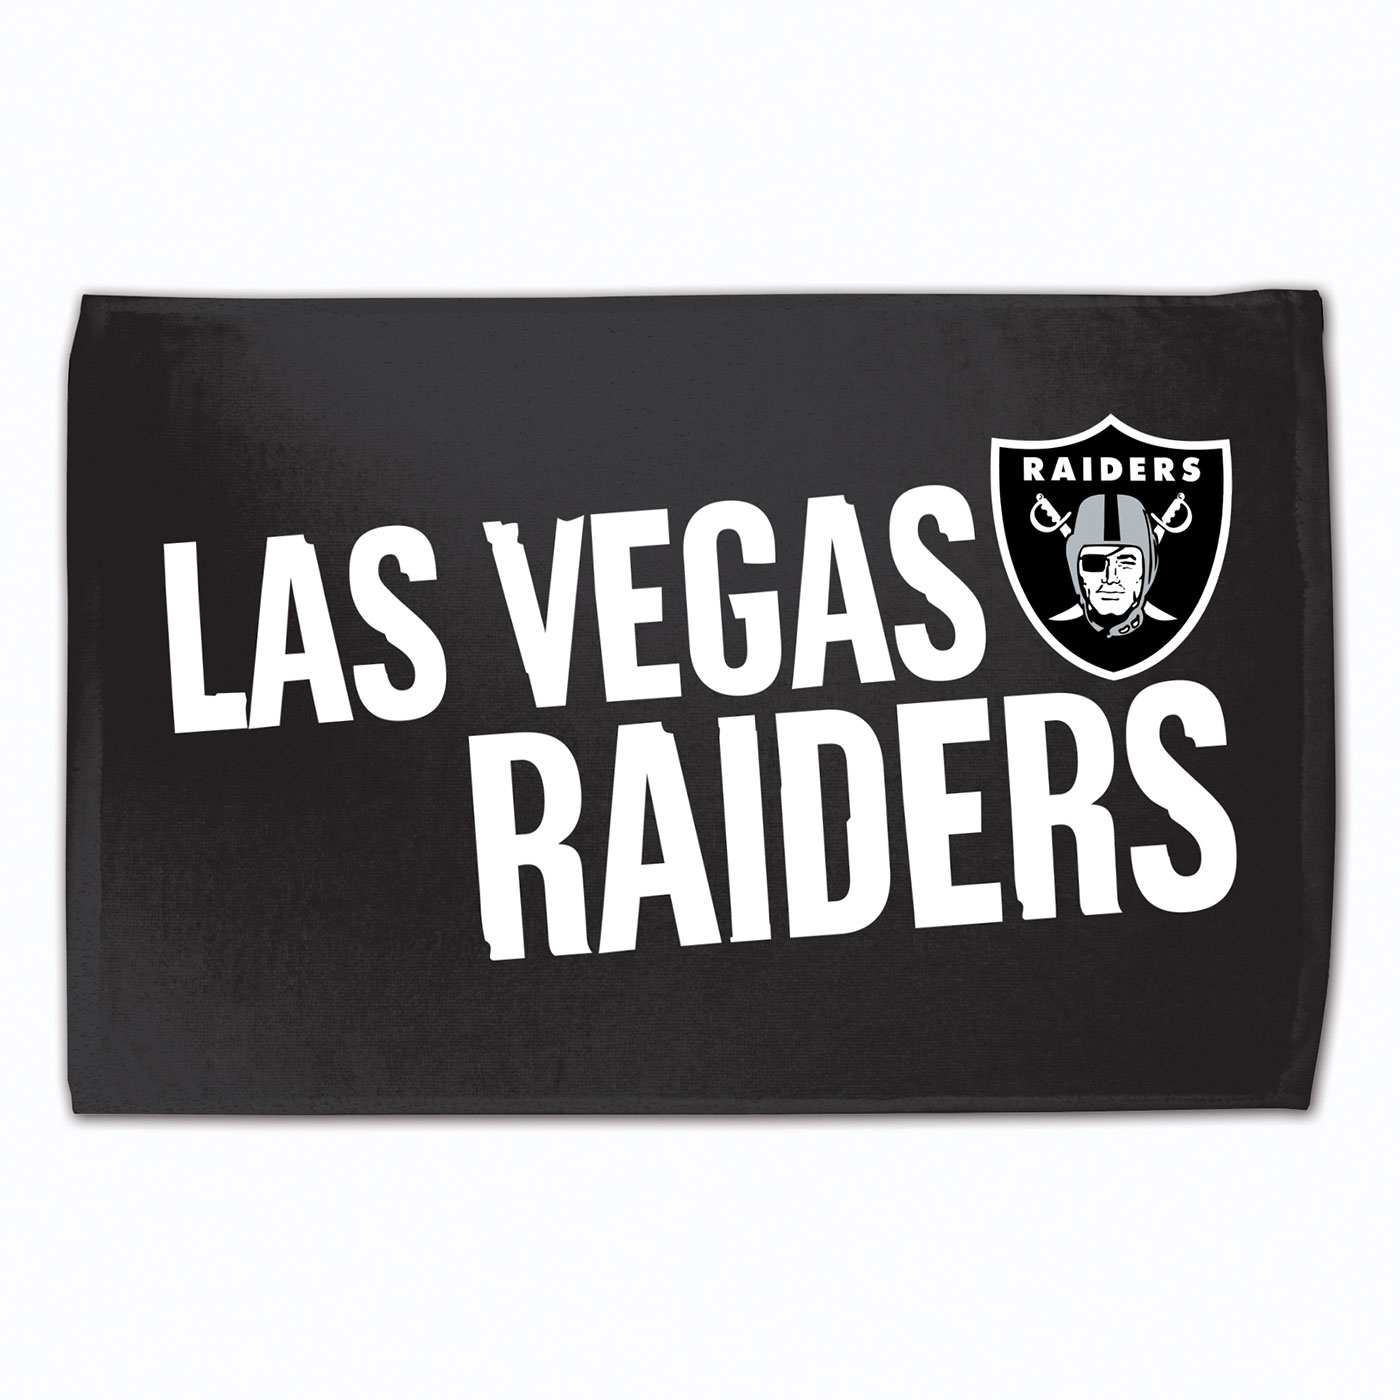 Las Vegas Raiders Rally Towel - Full color